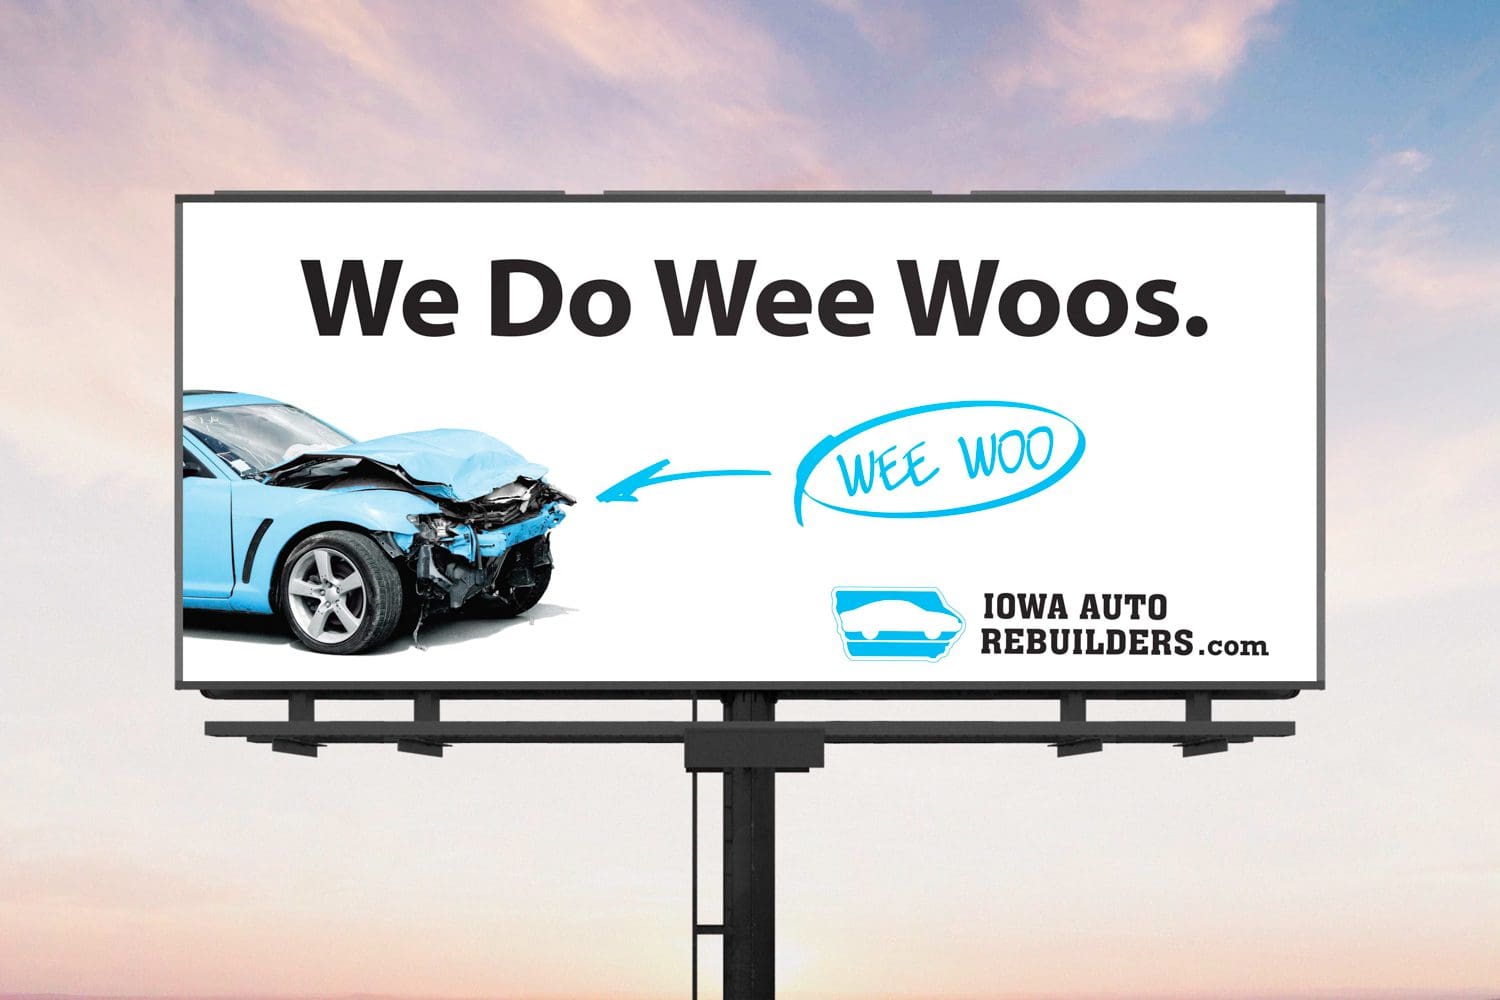 Iowa Auto Rebuilders billboard ad